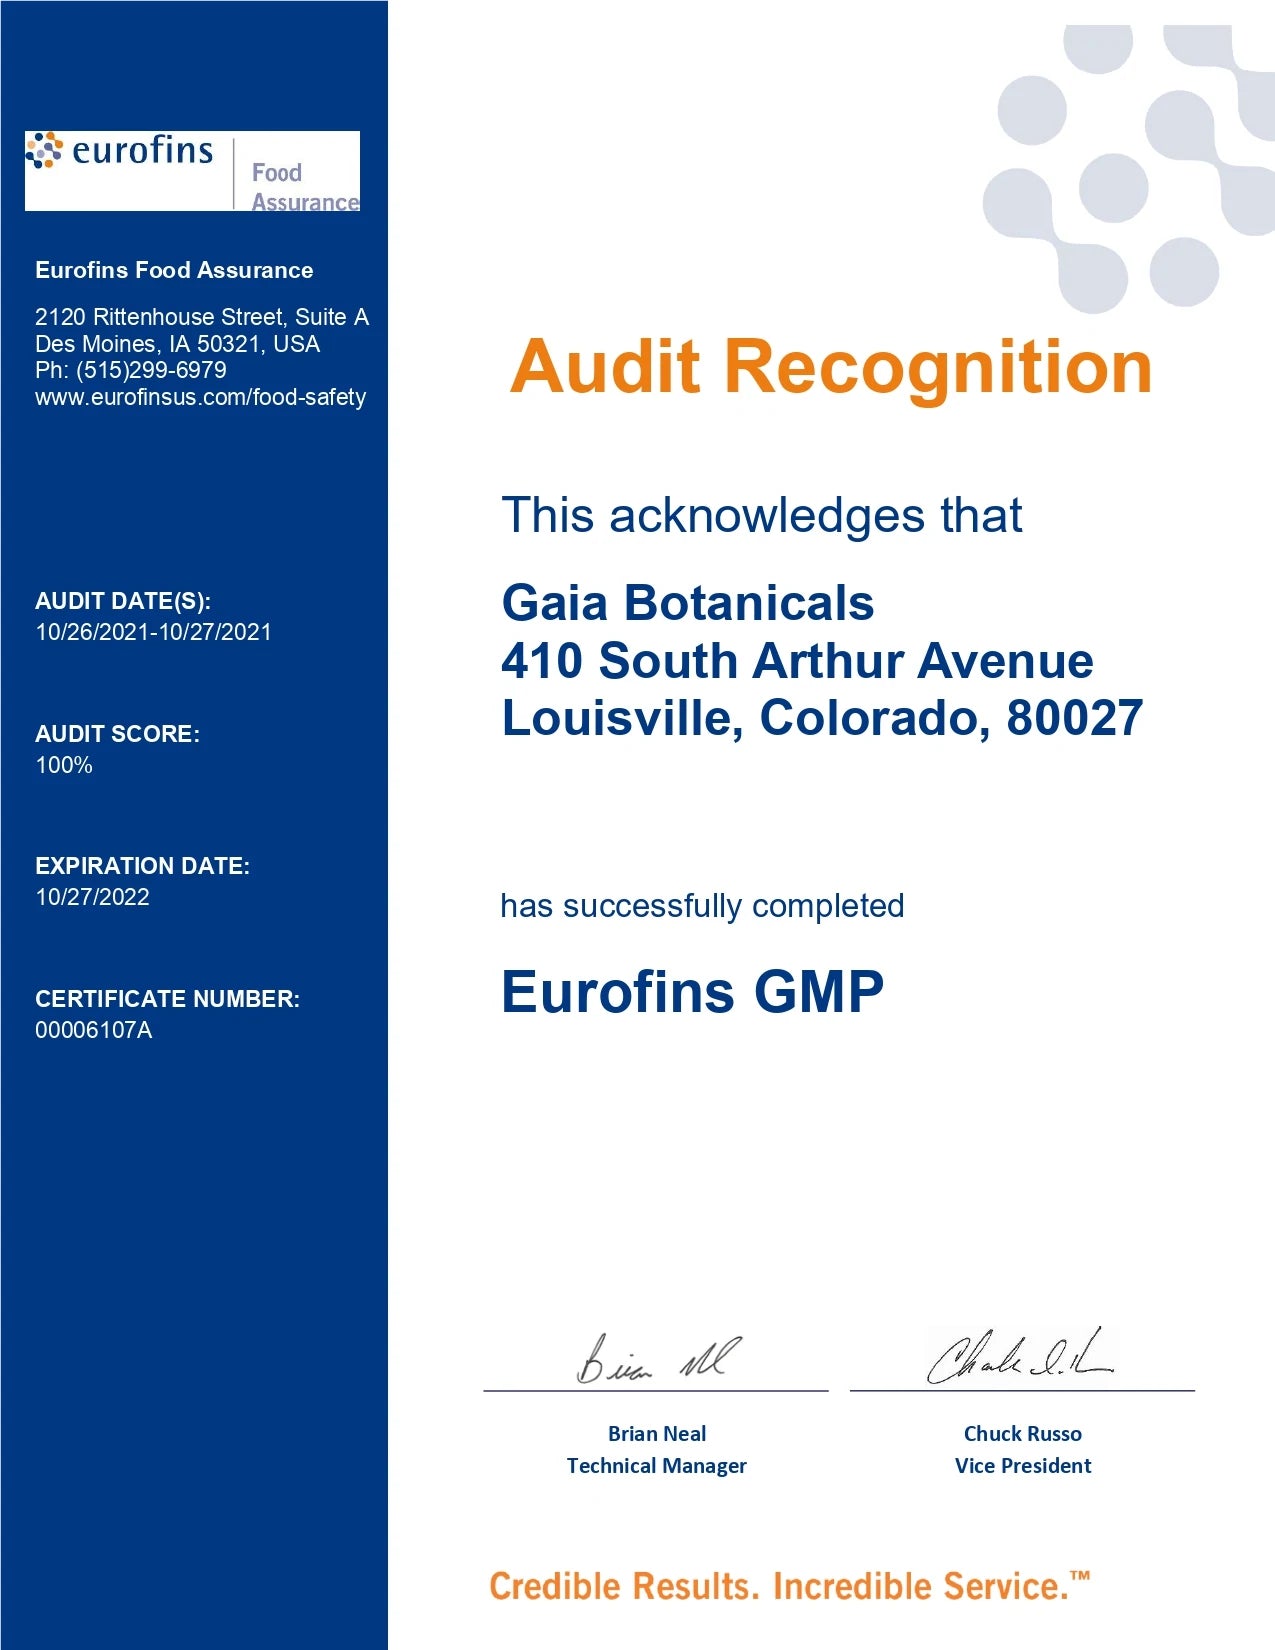 GMP Audit Recognition image